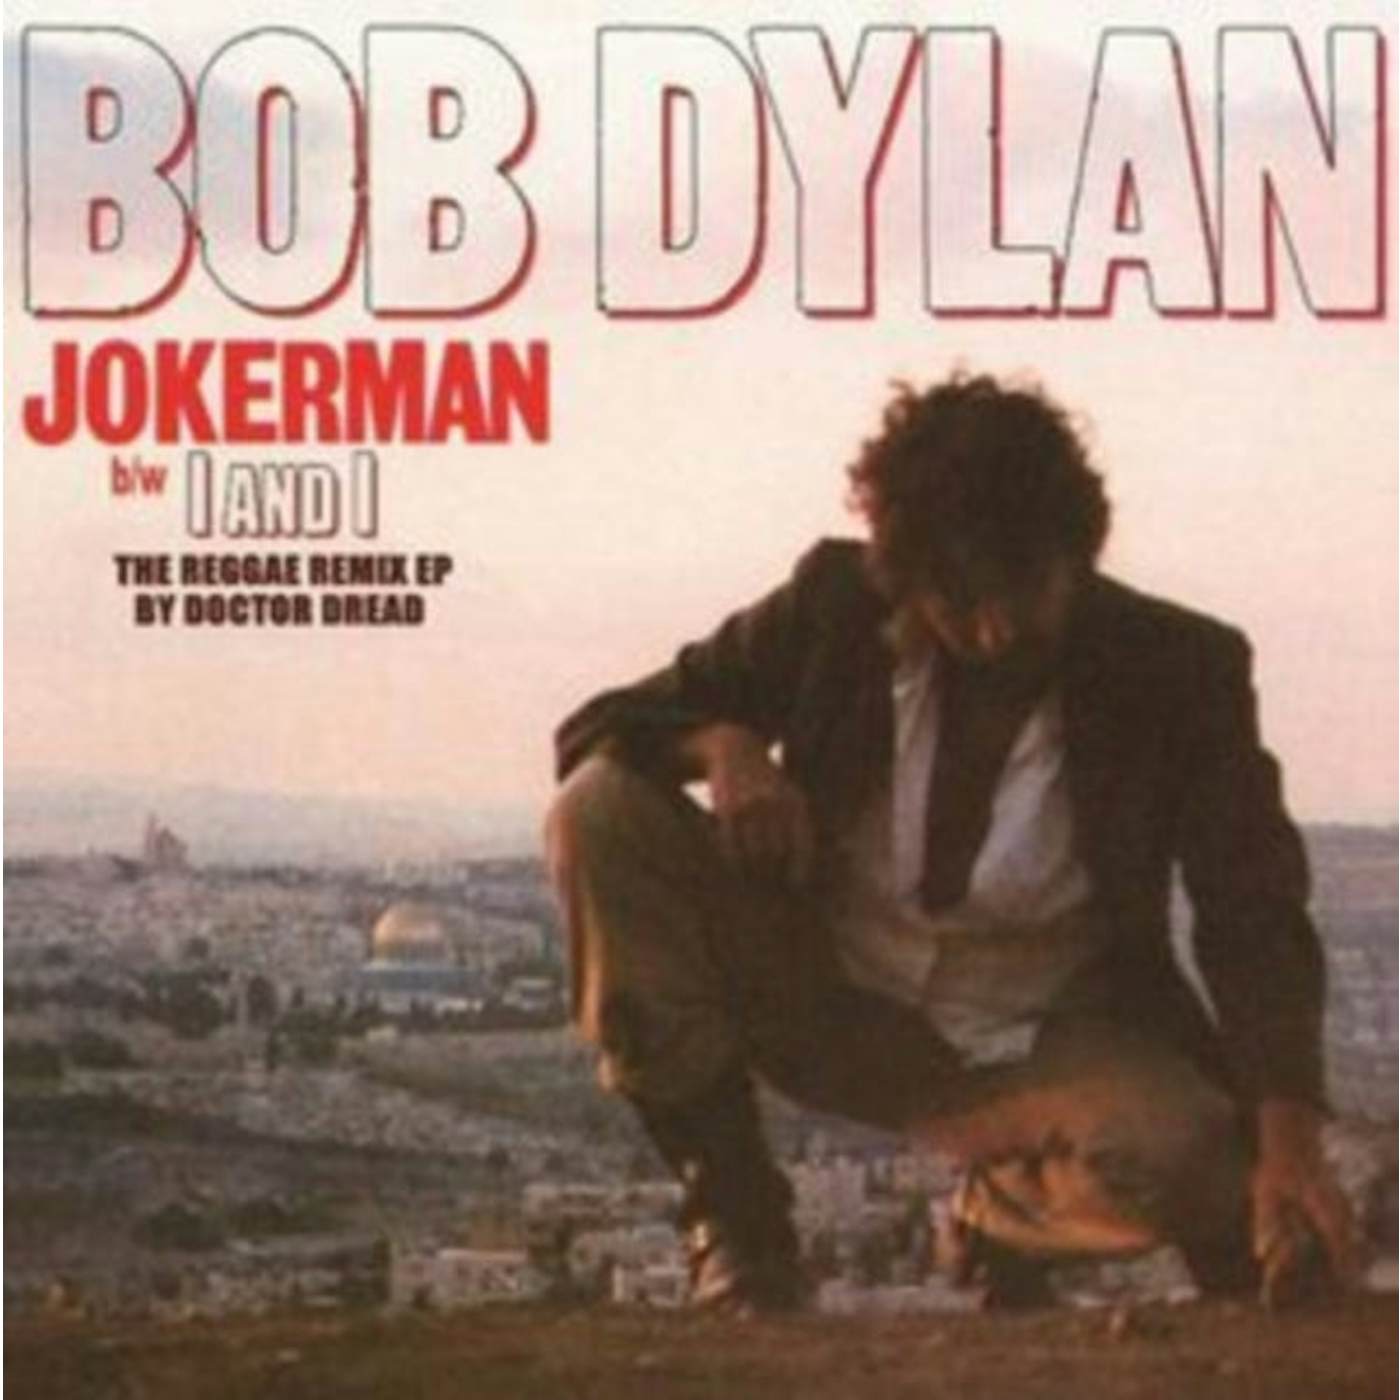 Bob Dylan LP Vinyl Record - Jokerman / I And I (The Reggae Remix Ep) (Rsd 20. 21)